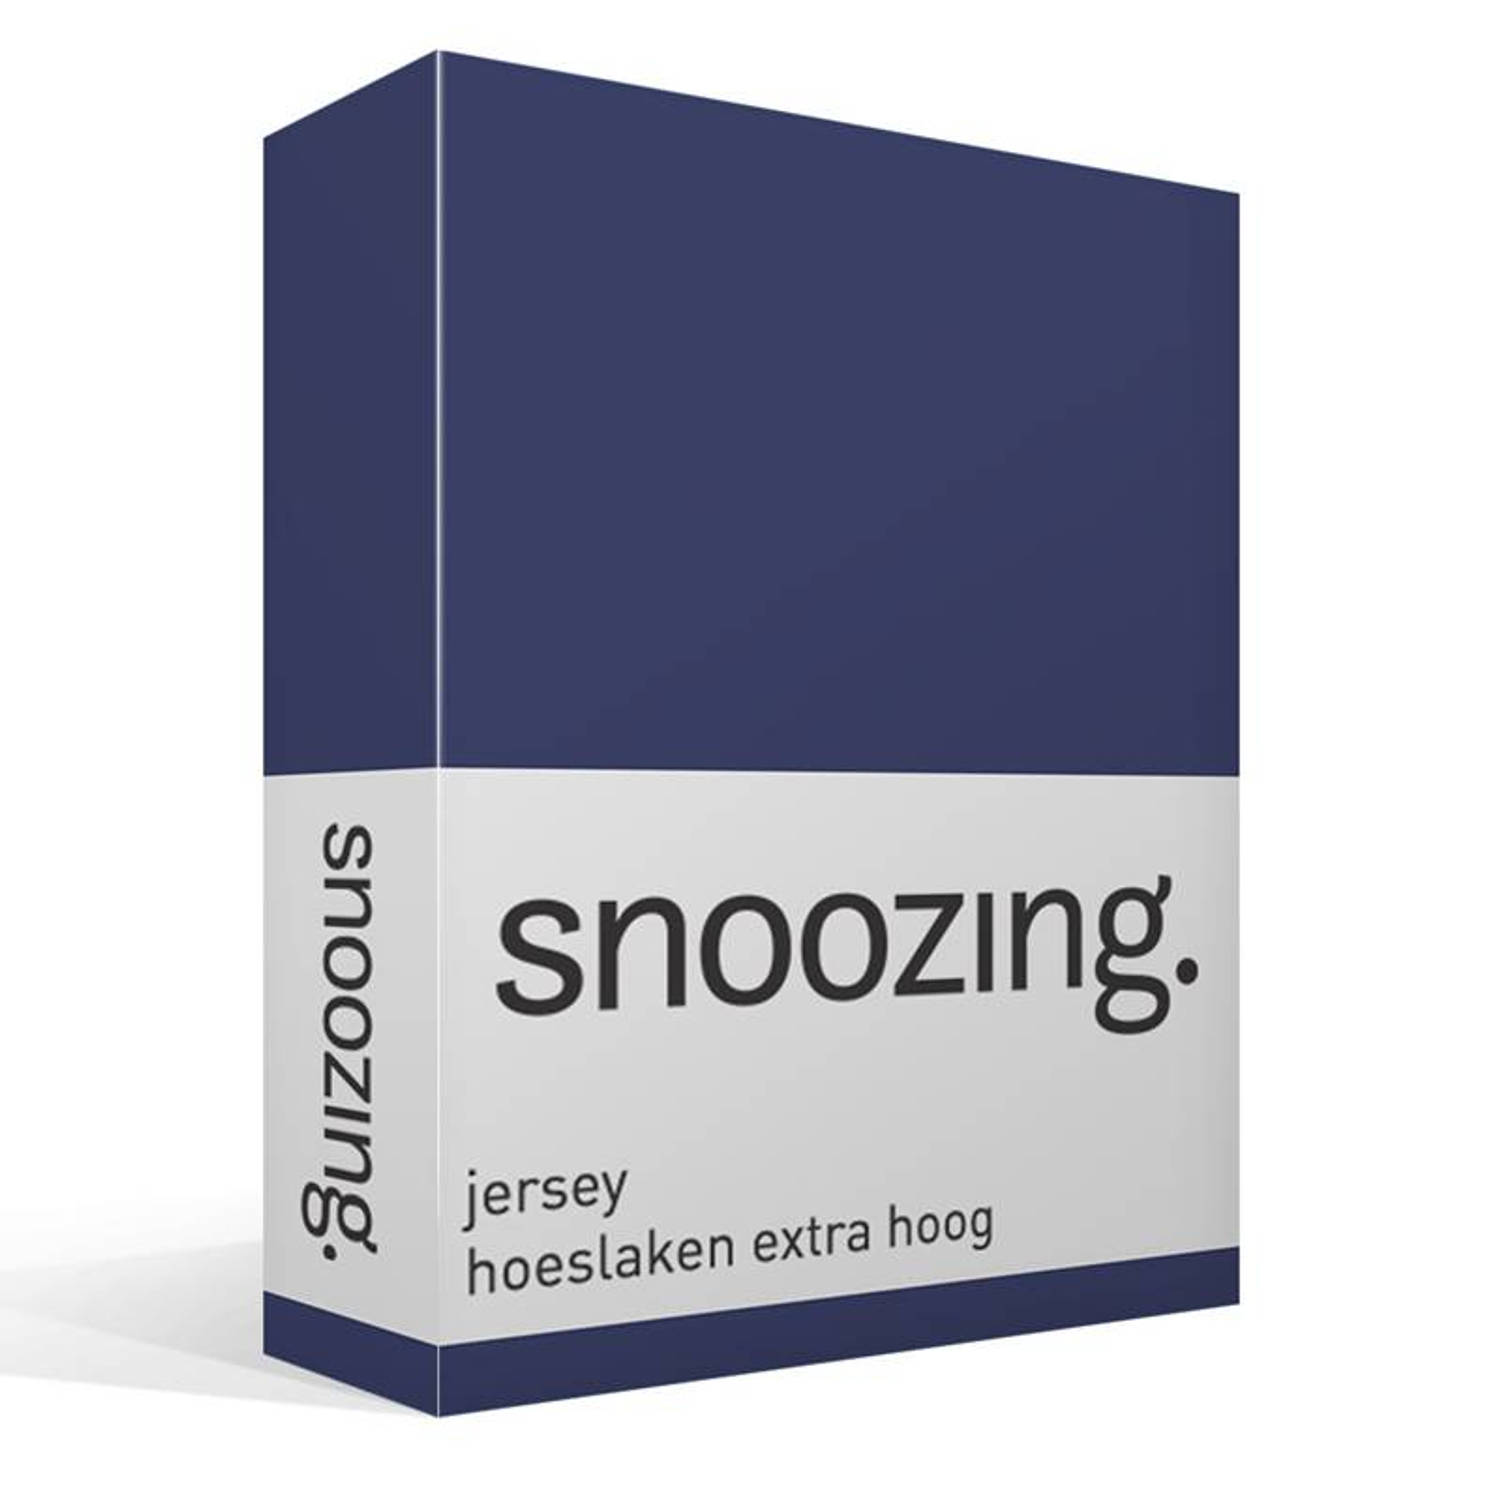 Snoozing jersey hoeslaken extra hoog - 100% gebreide katoen - Lits-jumeaux (160x210/220 cm) - Blauw, Navy